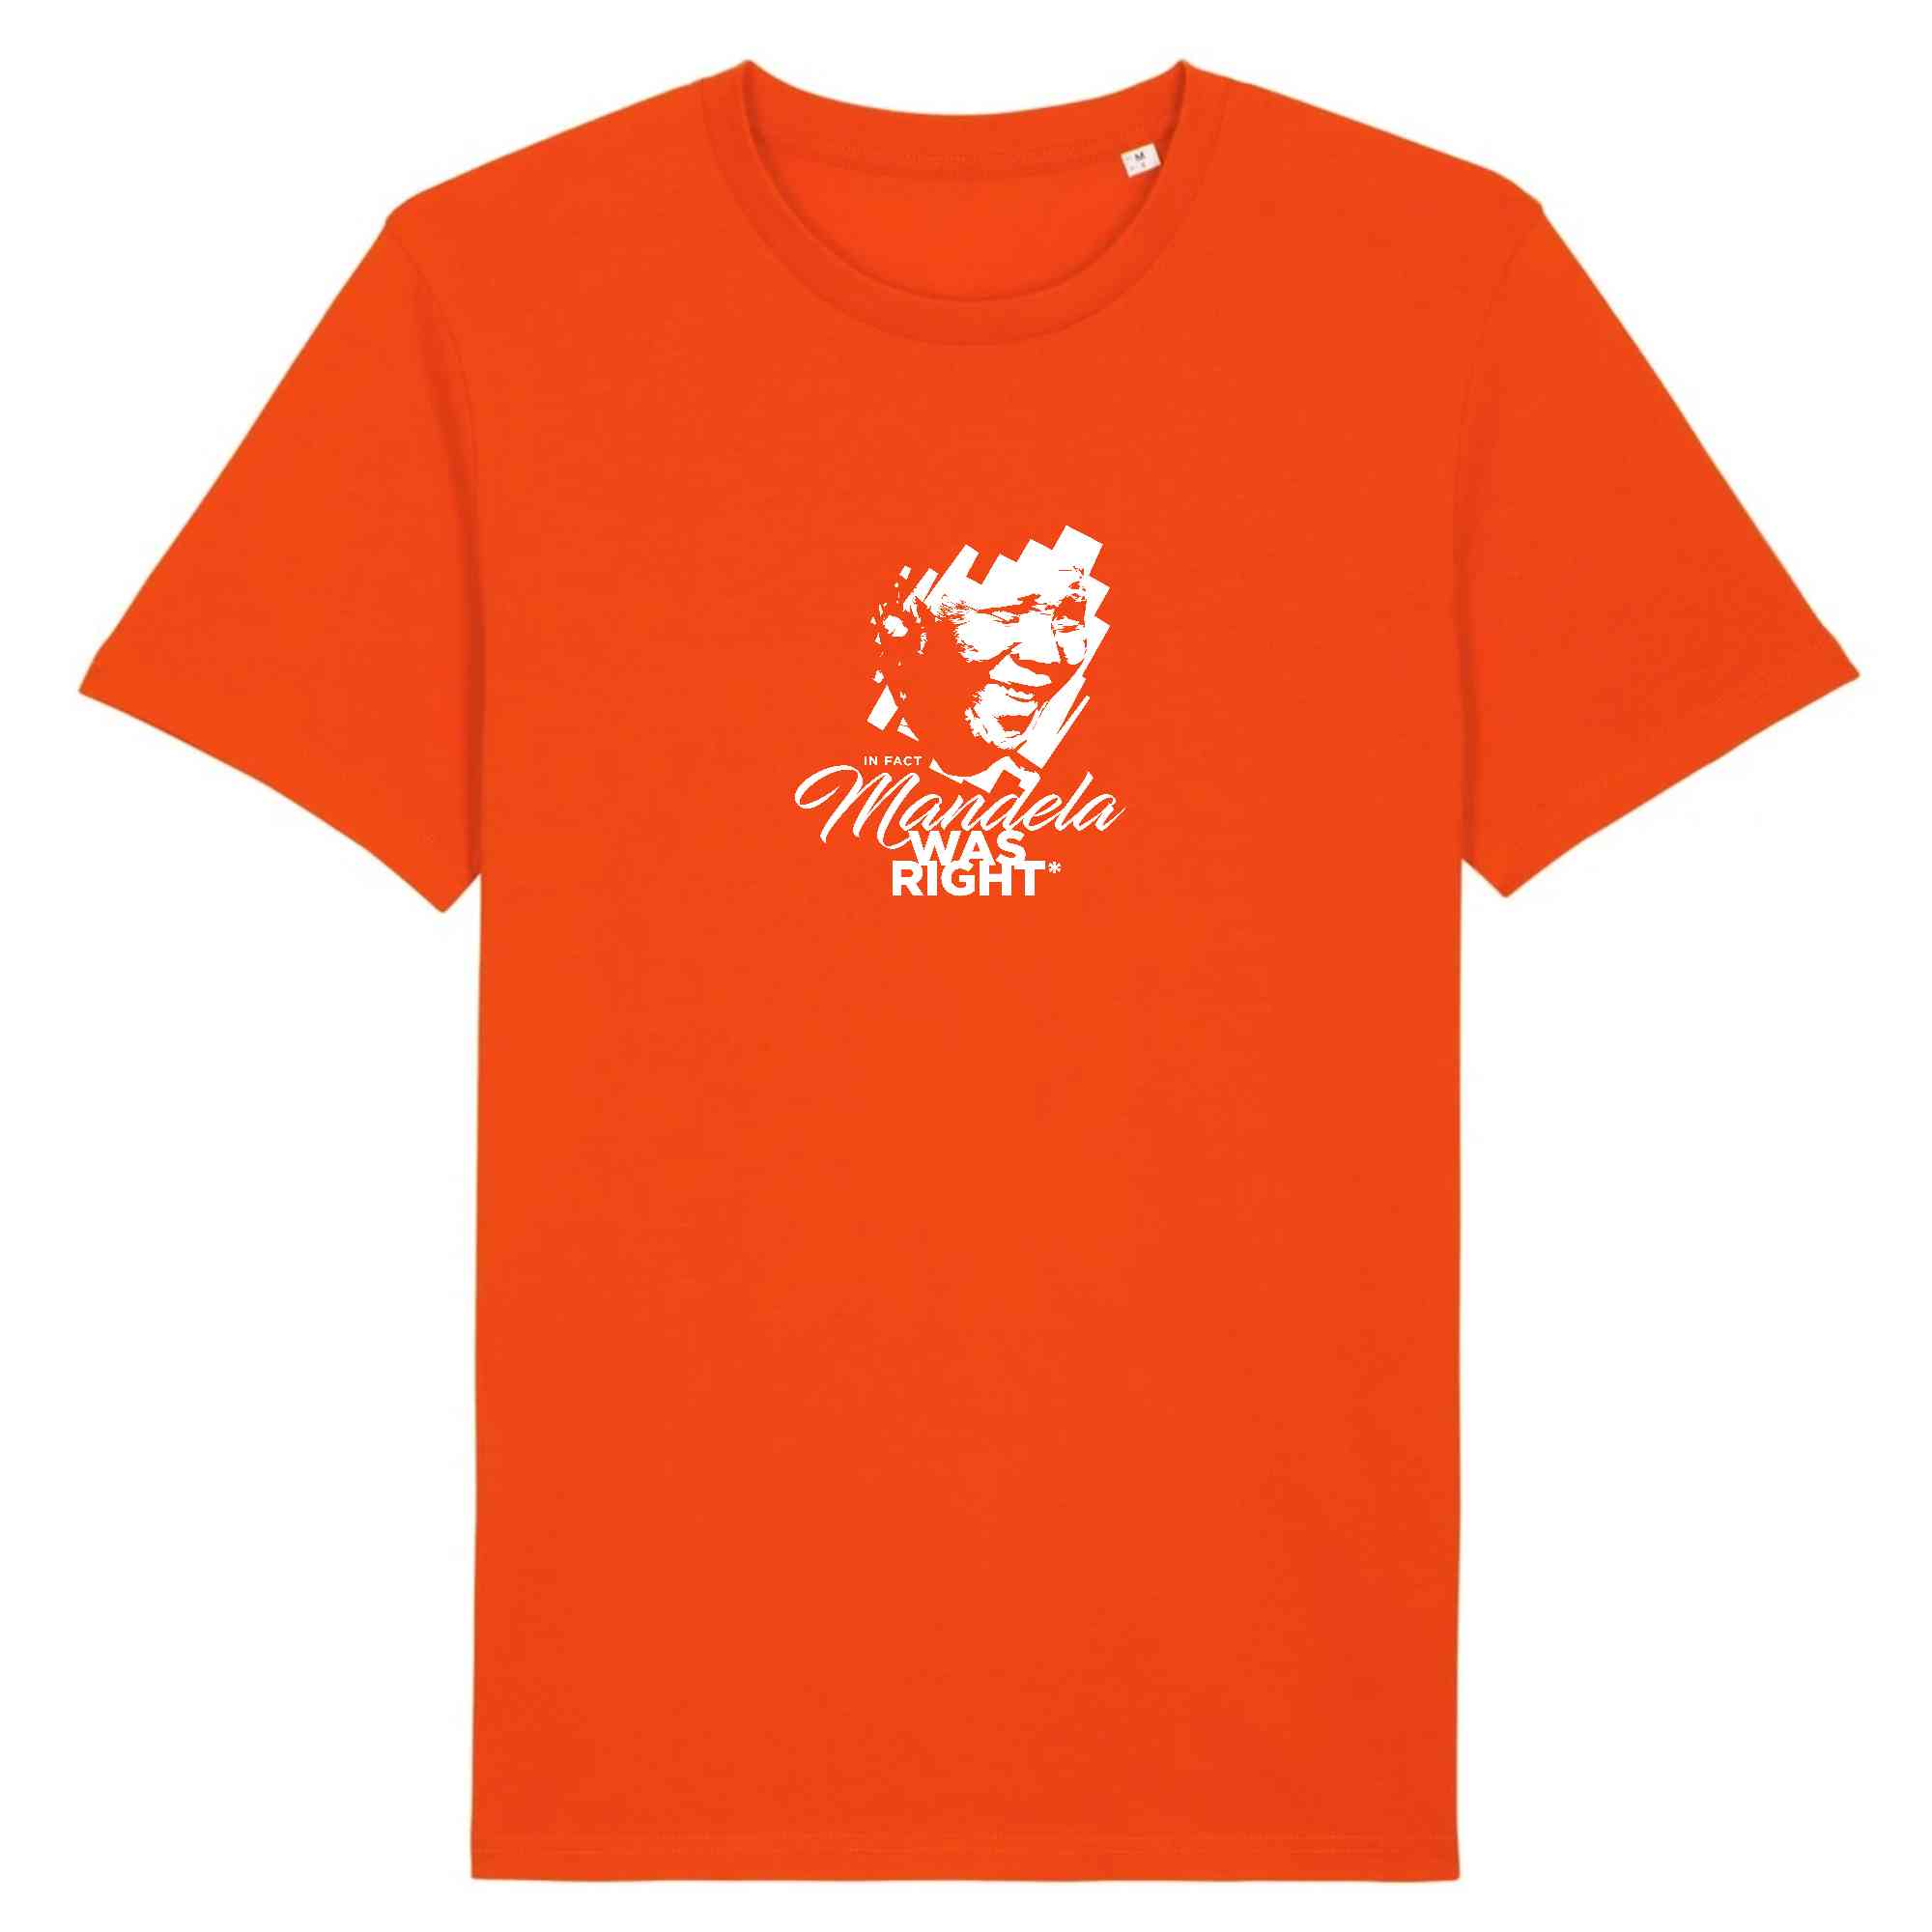 T-shirt orange et blanc Mandella WAS RIGHT - Colection inspiration - Mandella avait raison